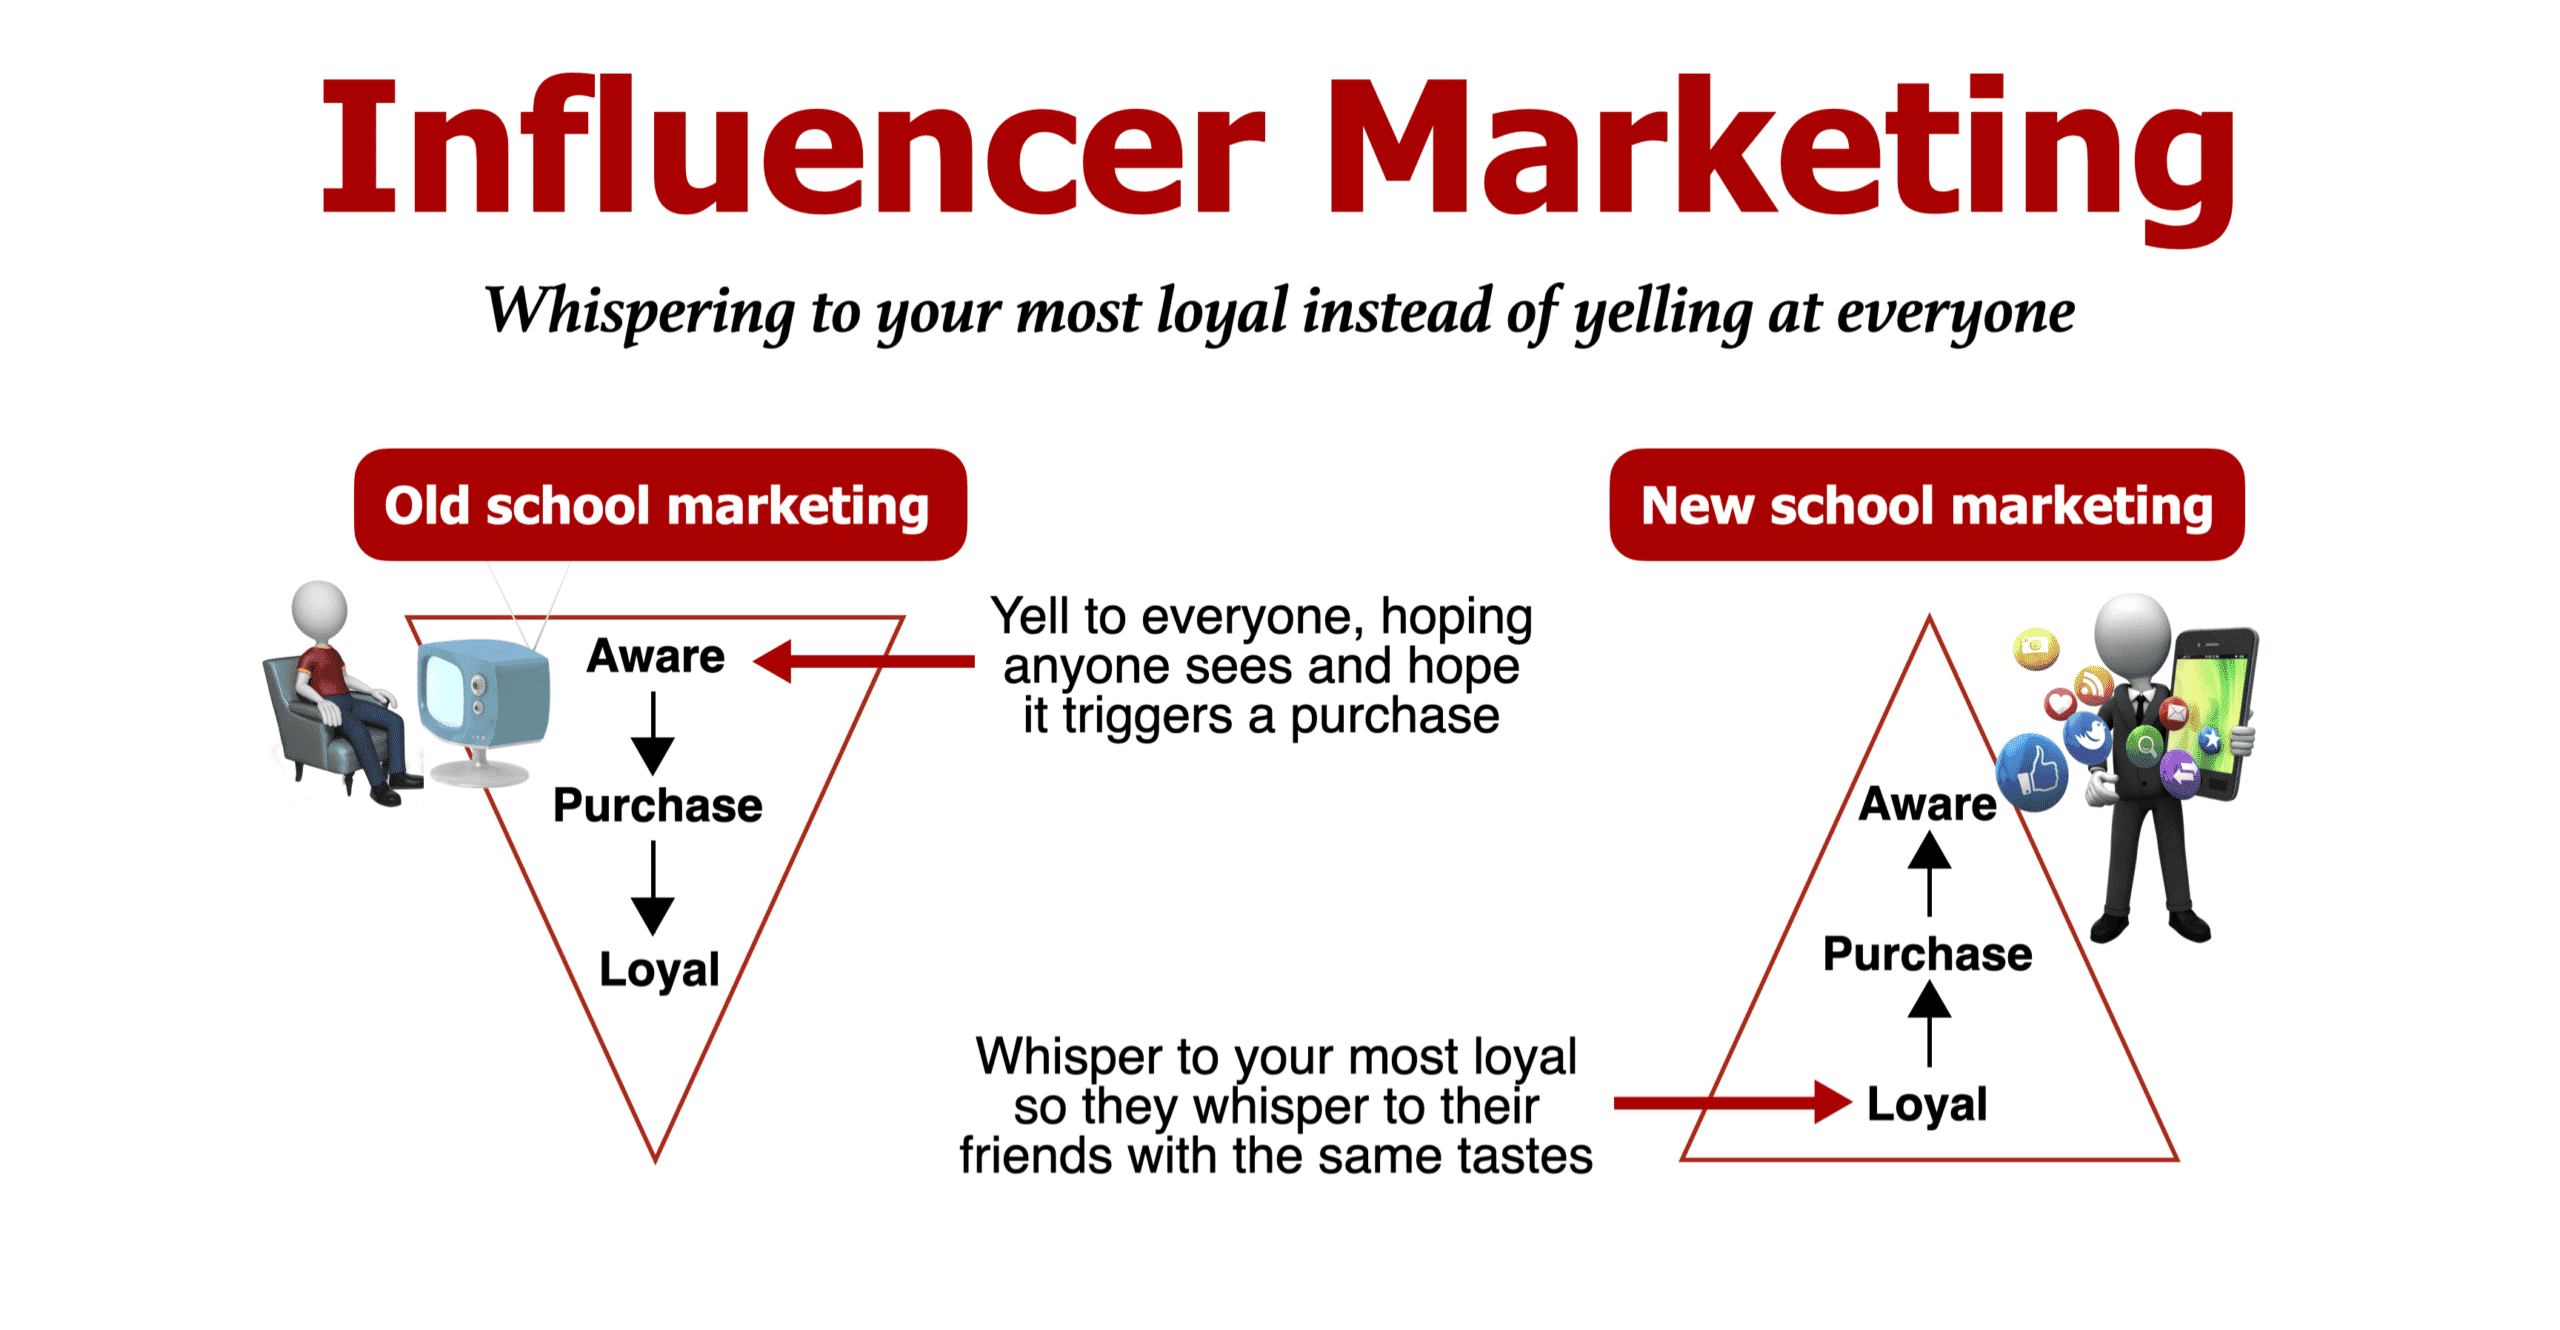 Influencer marketing using brand loyalists